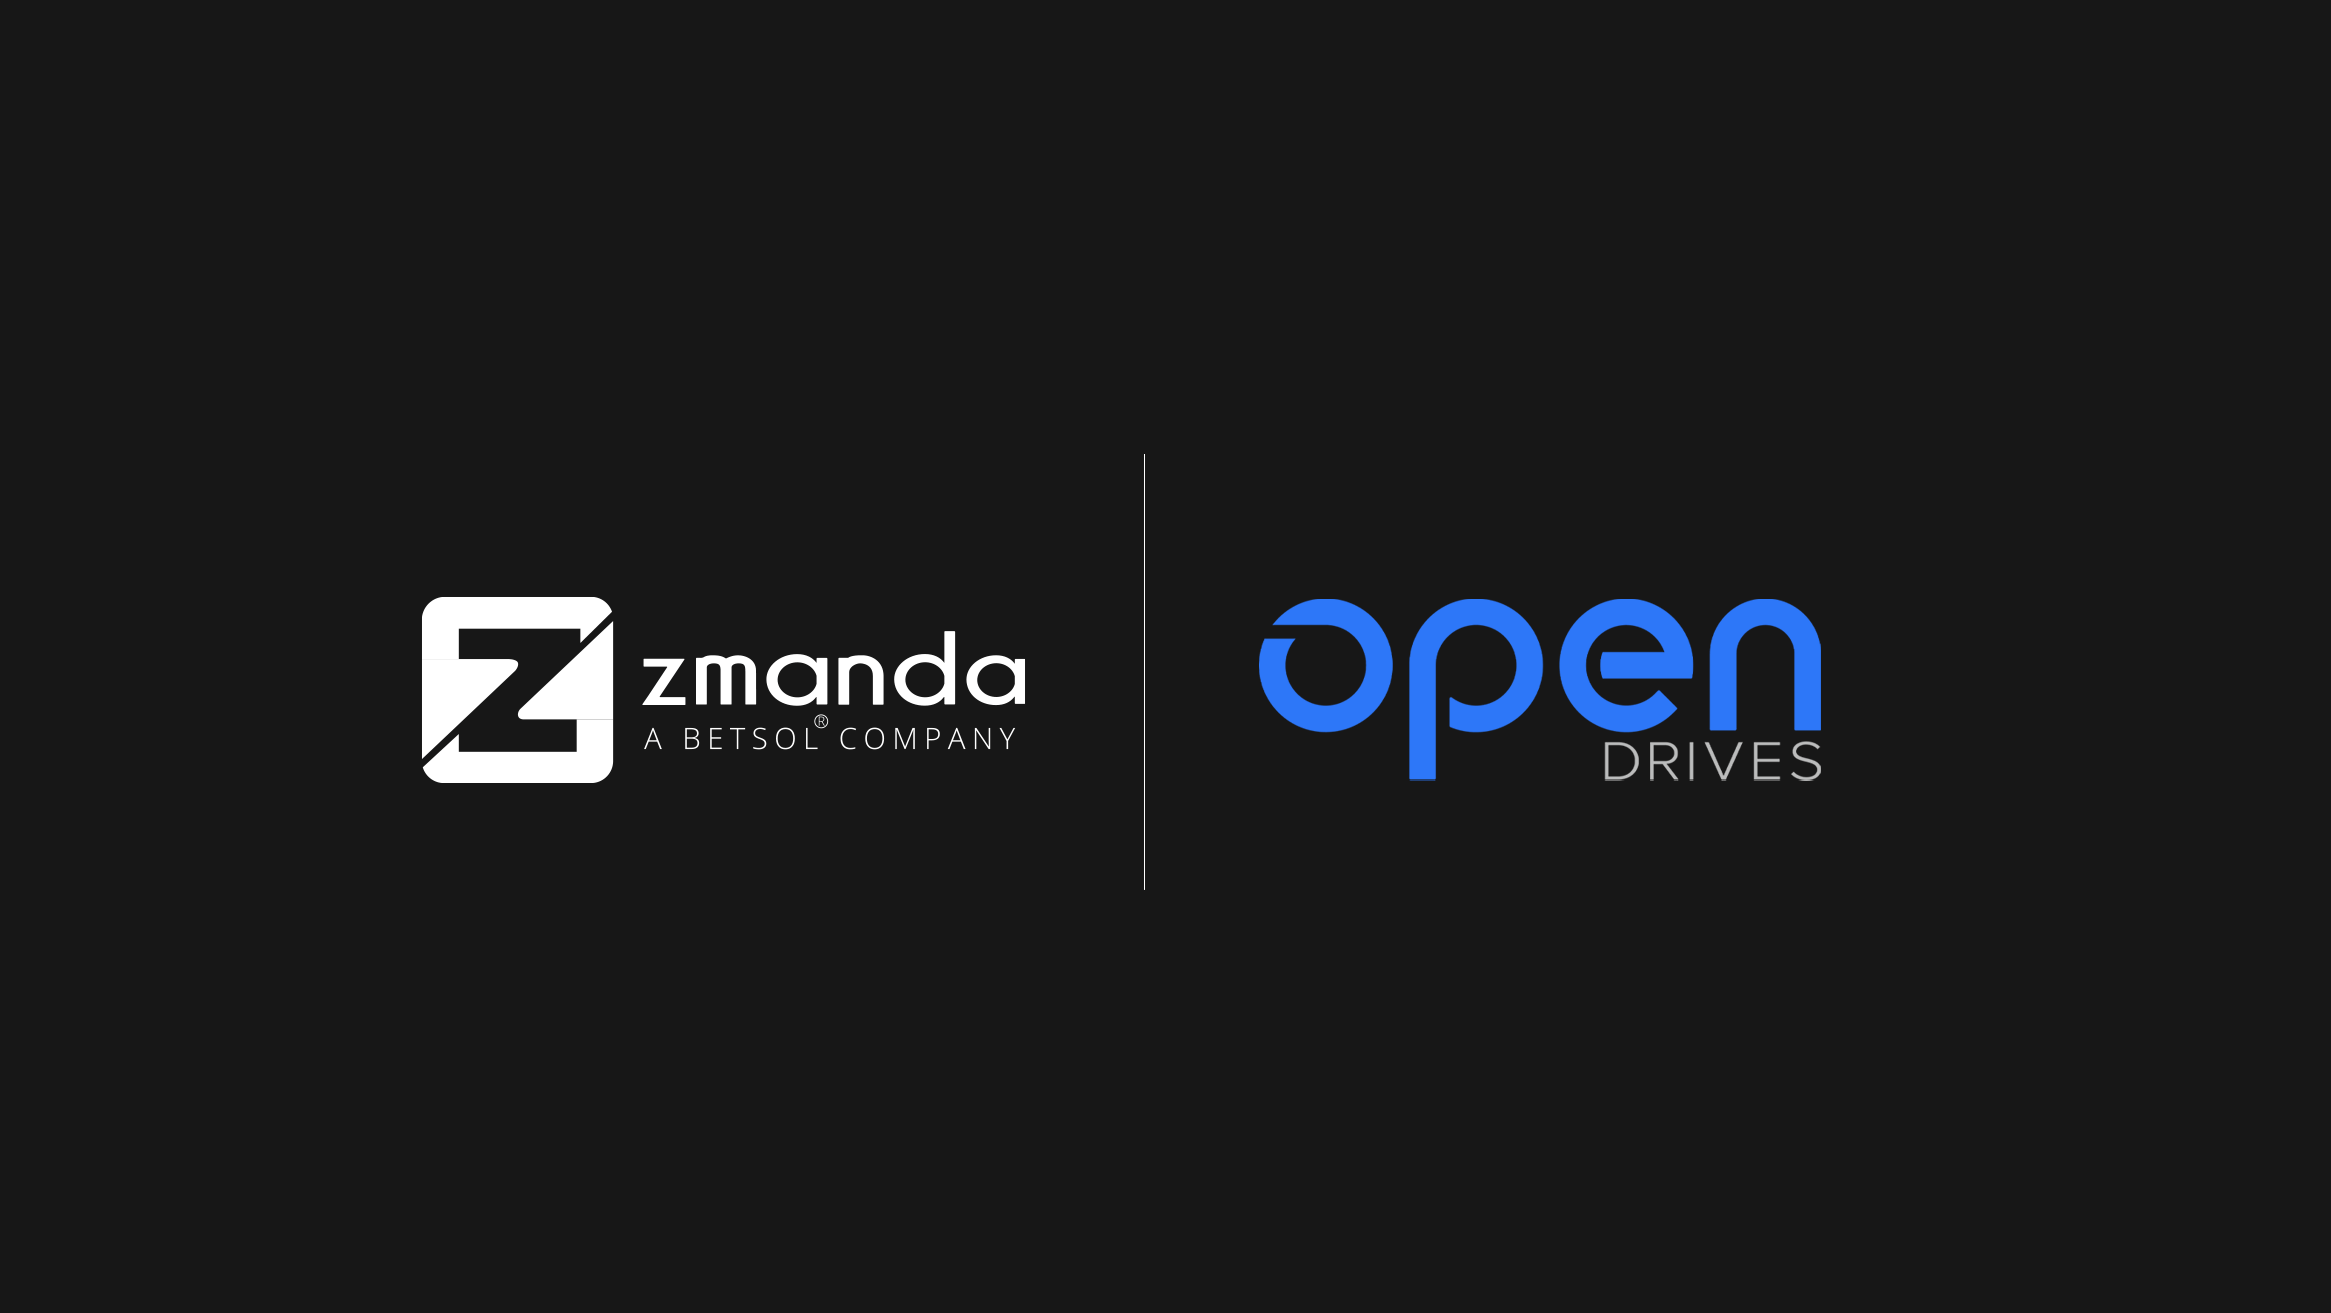 OpenDrives Zmanda Partnership